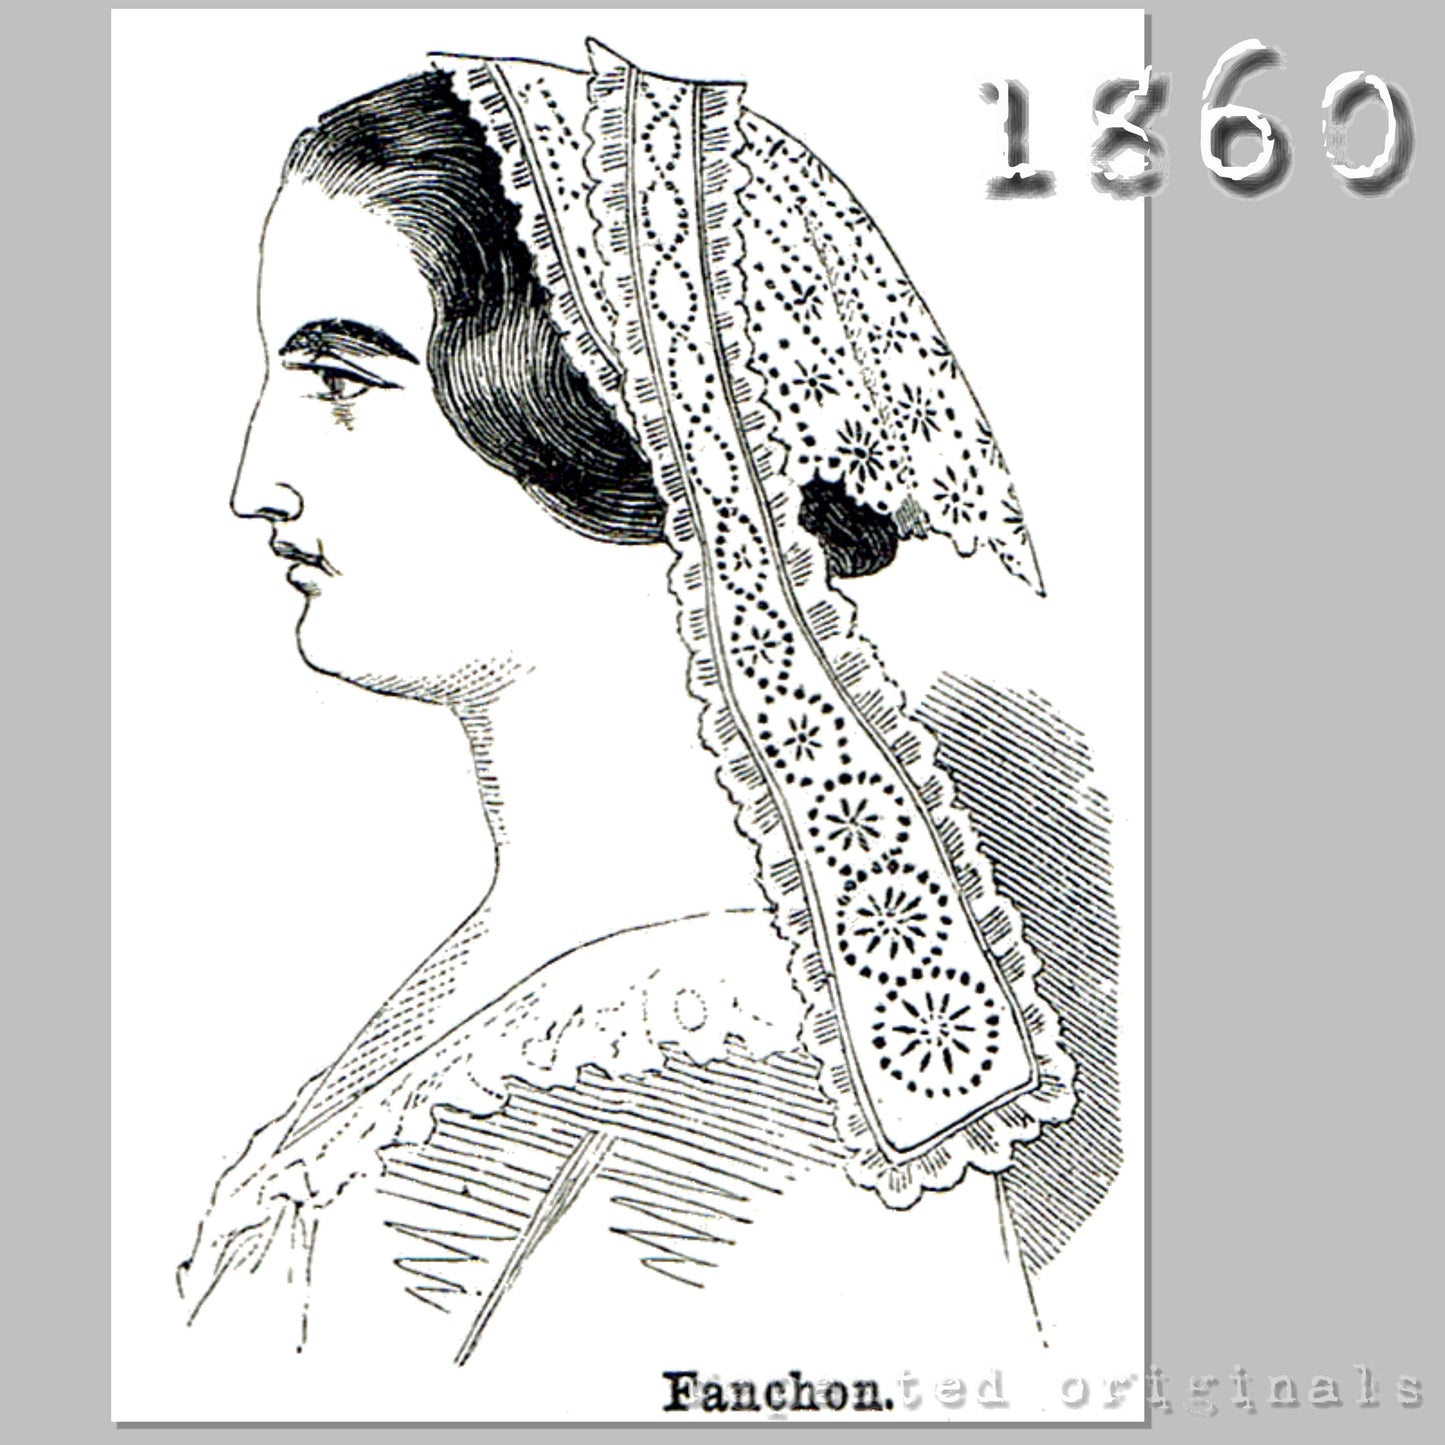 1860 Negligée Bonnet (Fanchon) Sewing Pattern - INSTANT DOWNLOAD PDF